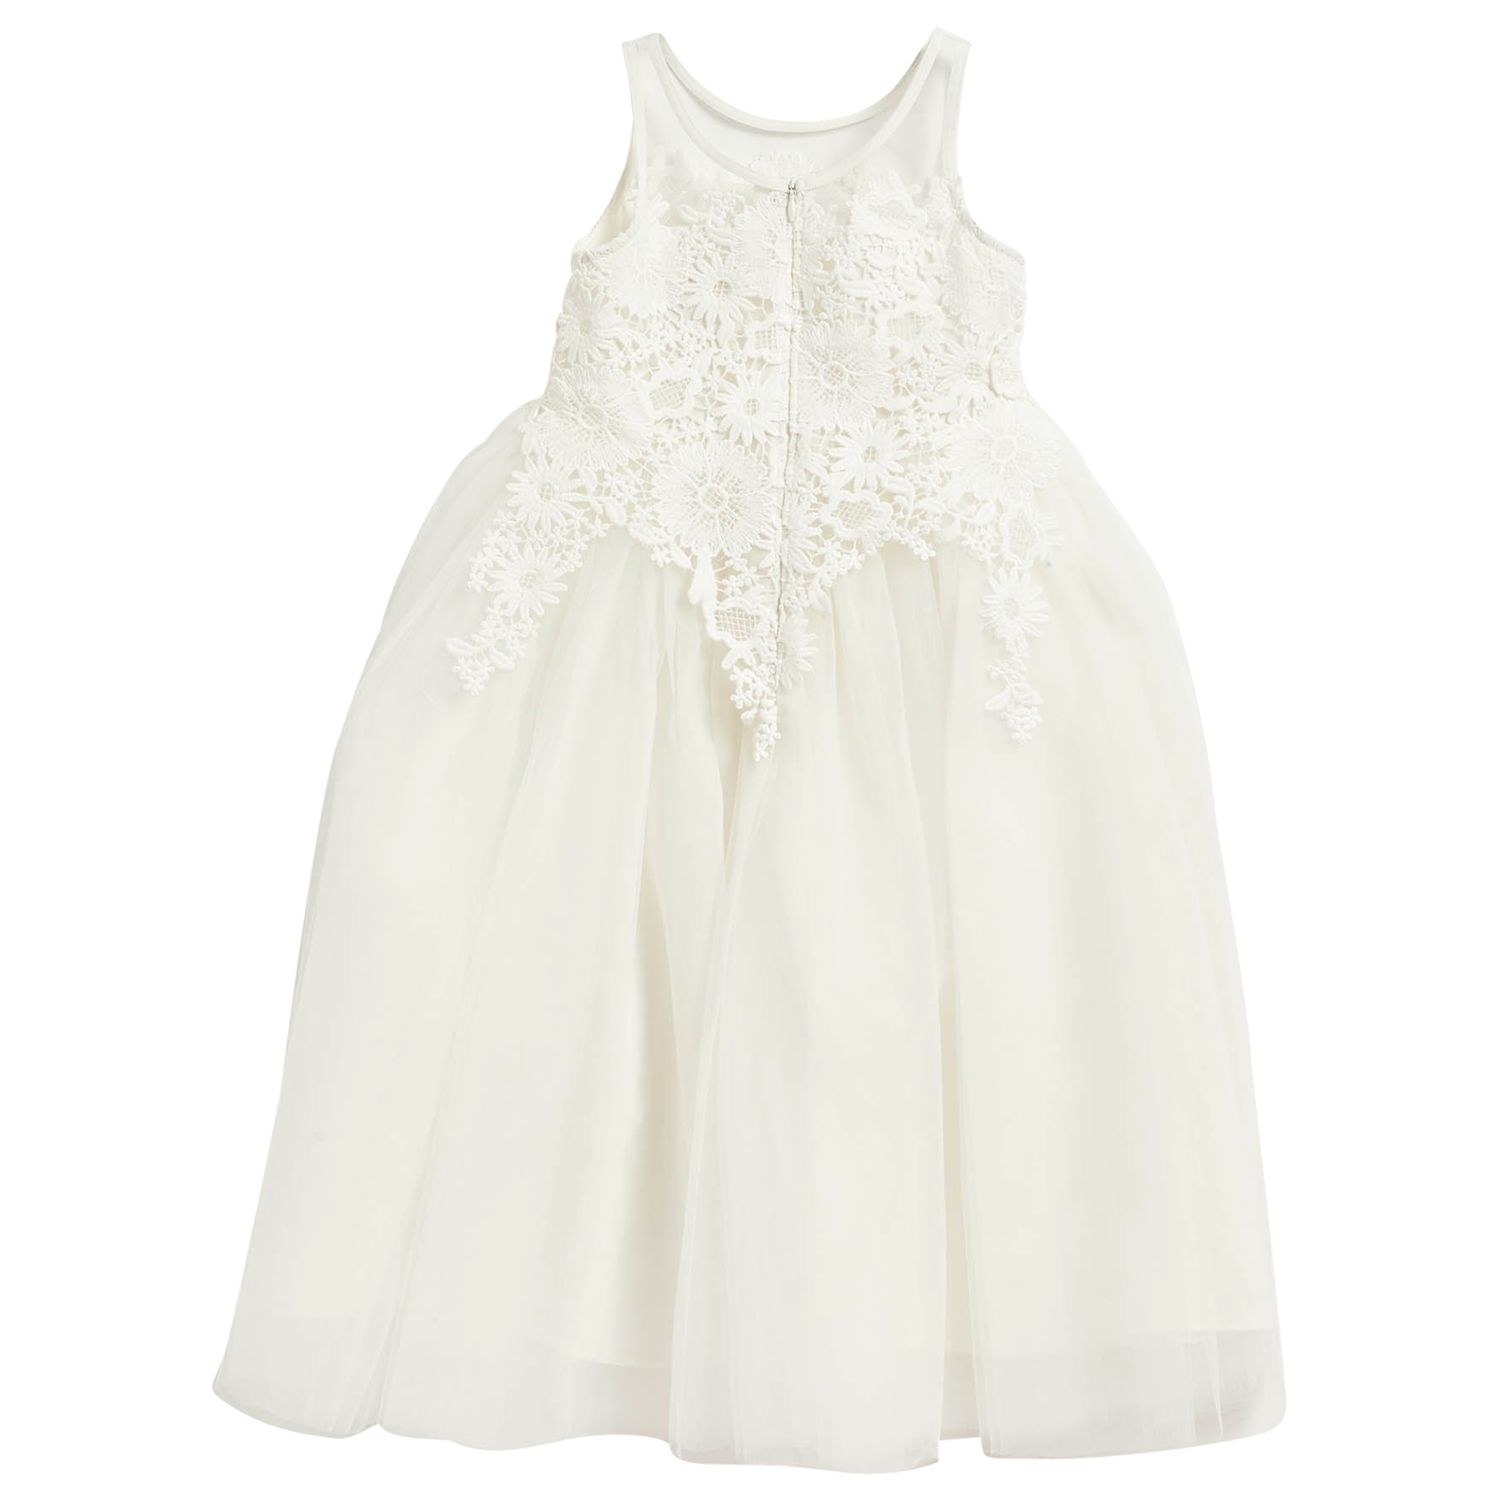 Angel & Rocket Girls' Lace Insert Dress, White